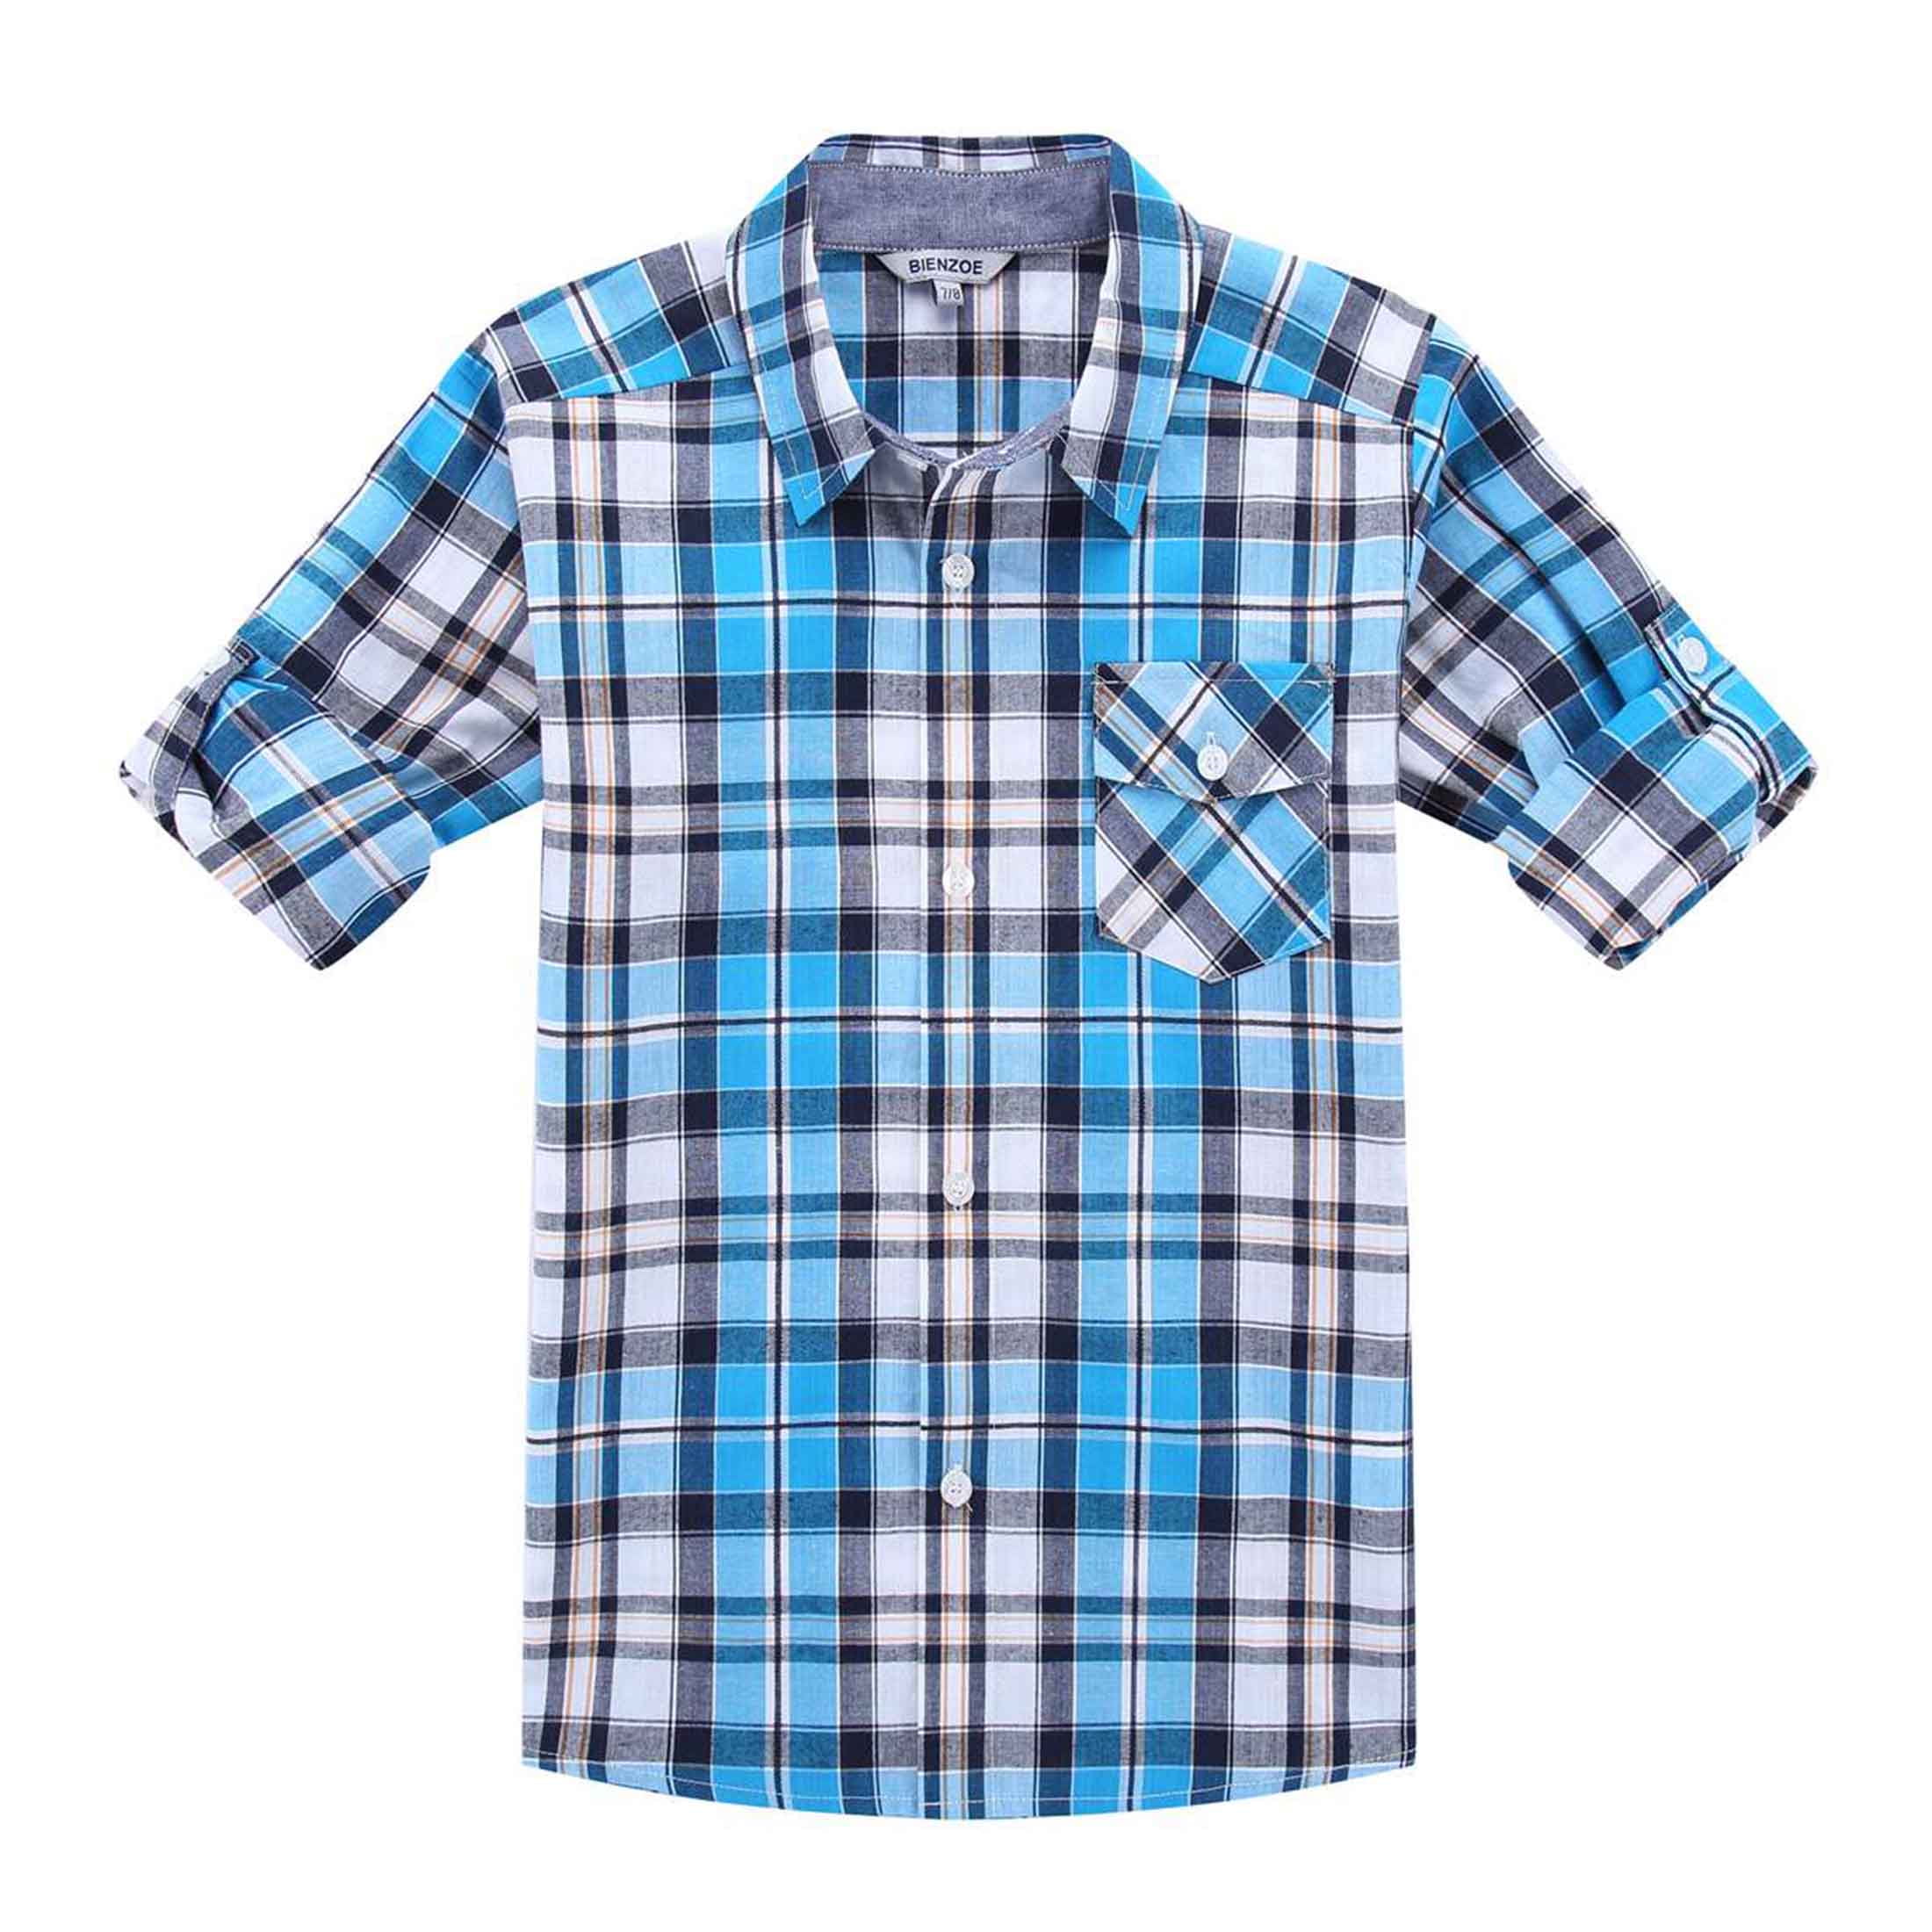 Bienzoe Boy's Cotton Plaid Roll Up Button Down Sports Shirts Navy/Blue ...